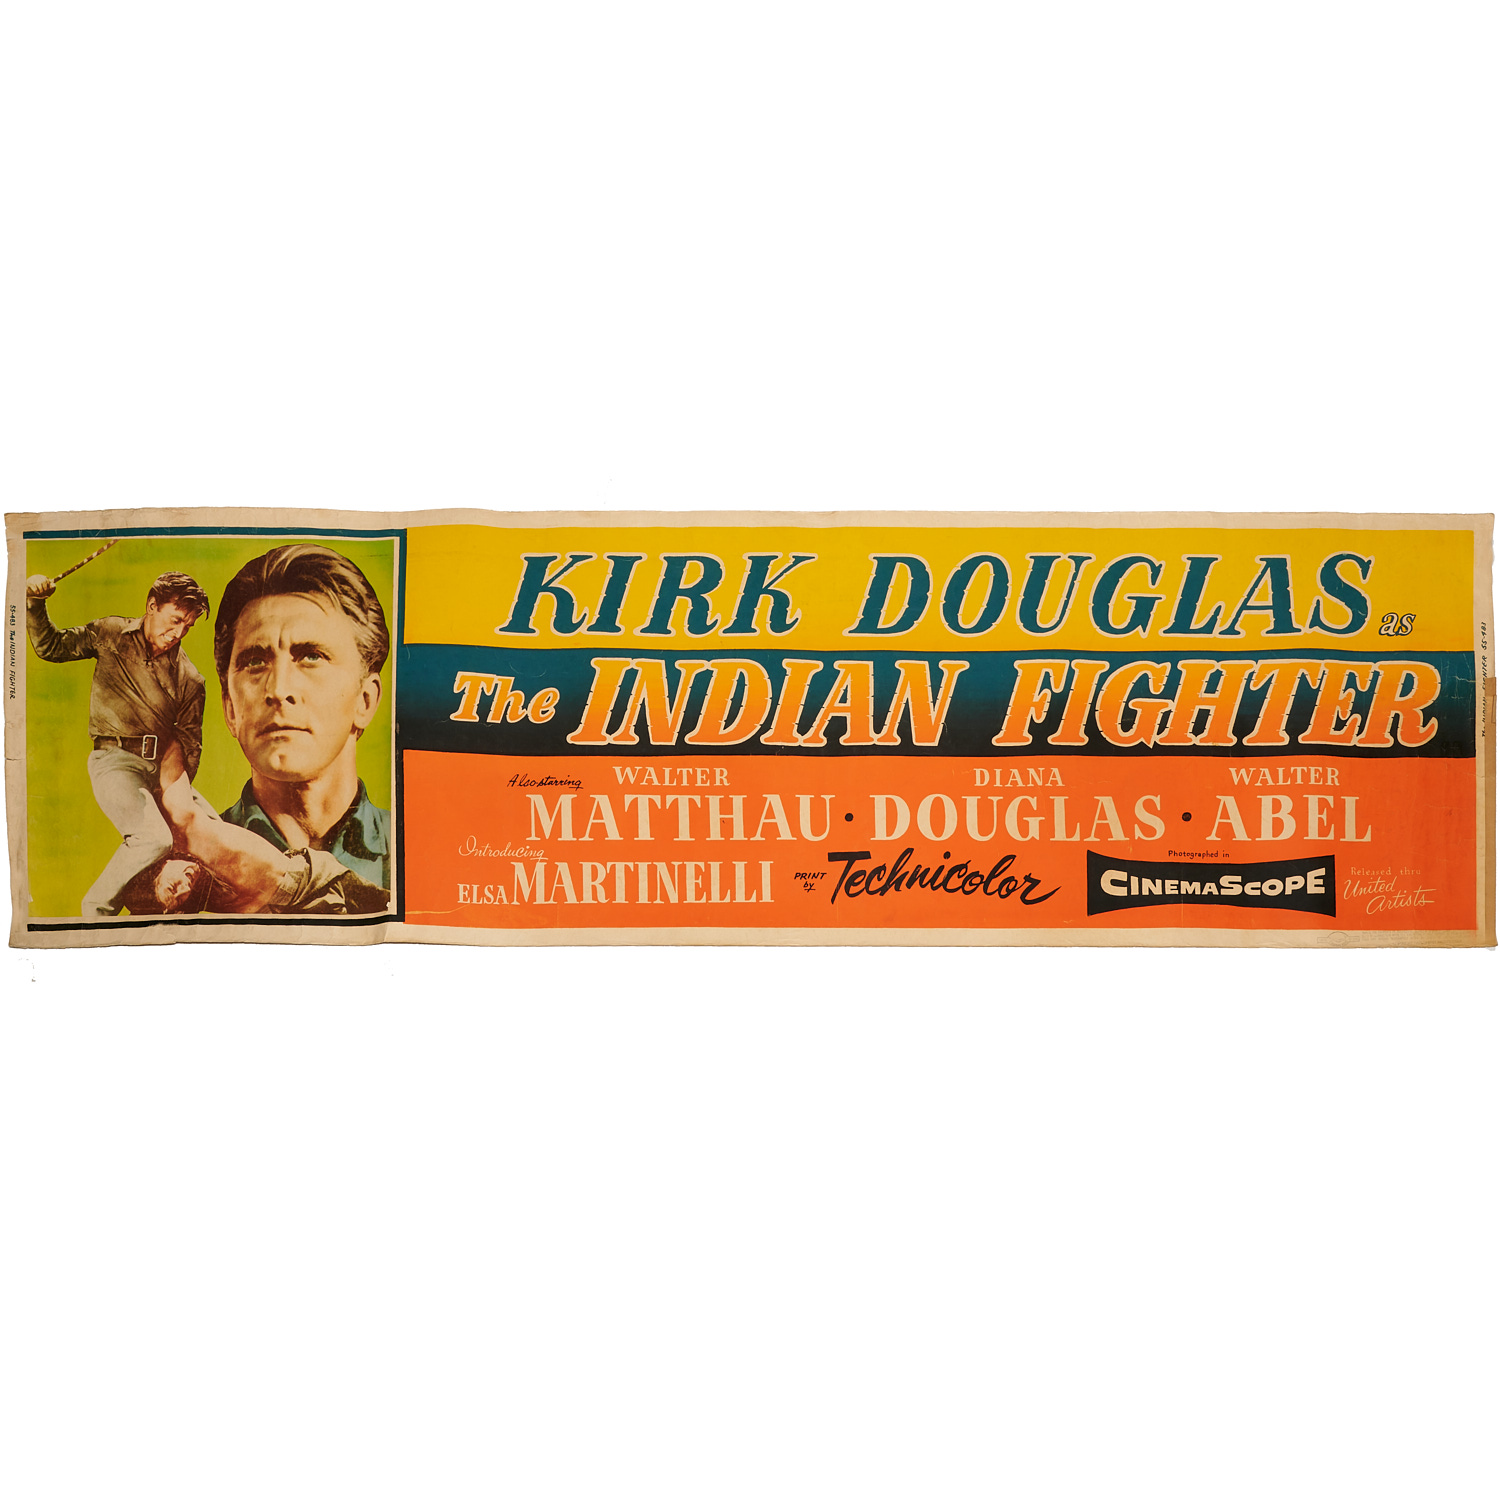 KIRK DOUGLAS "INDIAN FIGHTER" BANNER